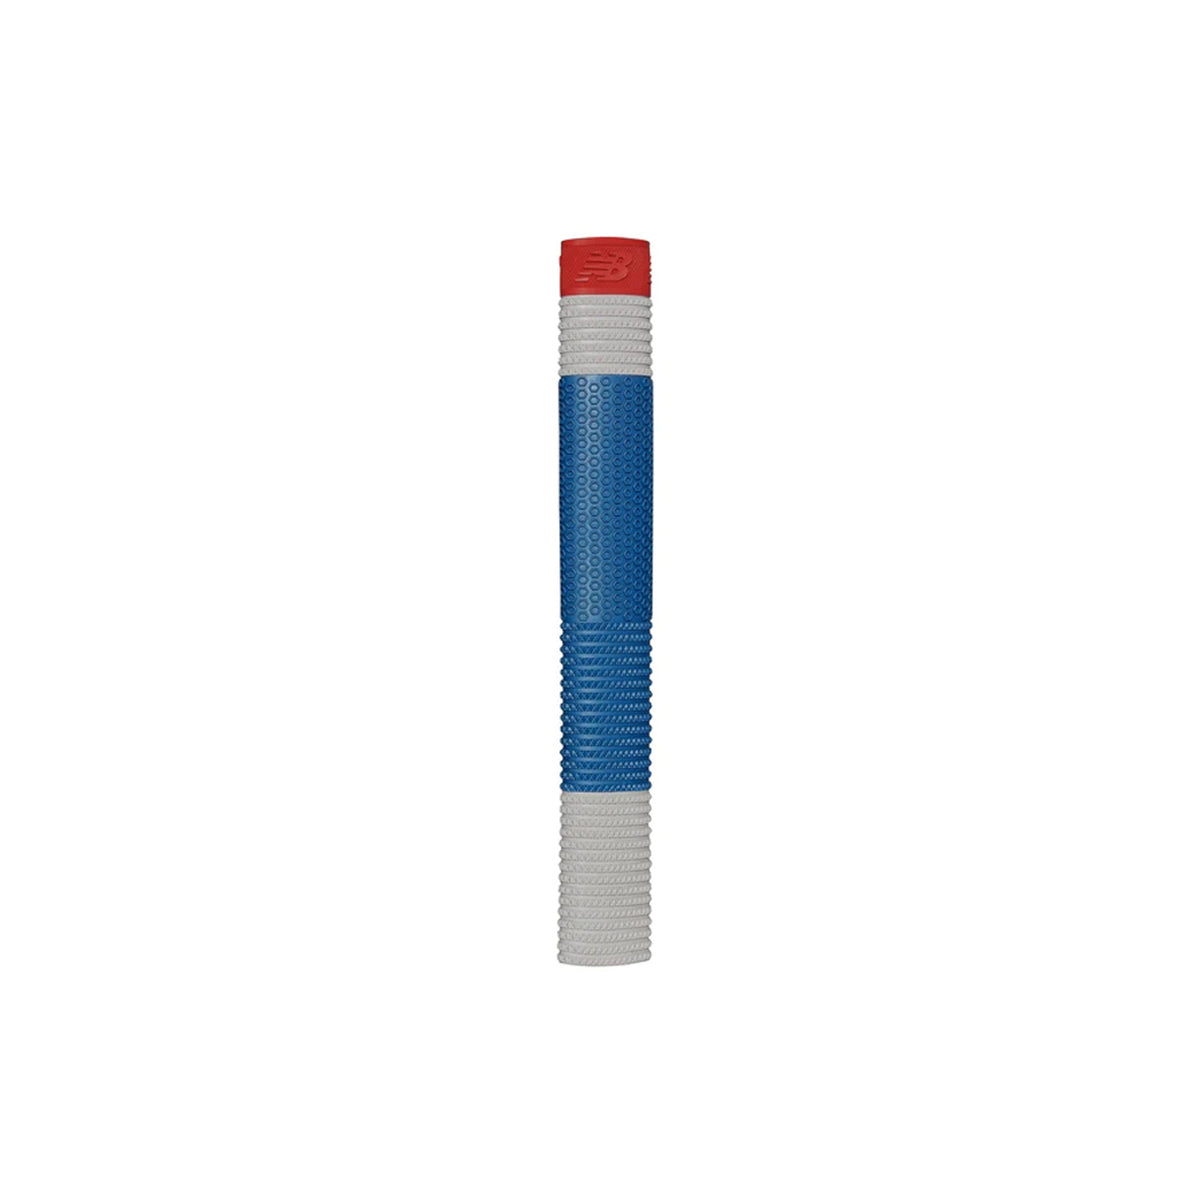 New Balance TC Cricket Bat Grip: Red/White/Blue/White